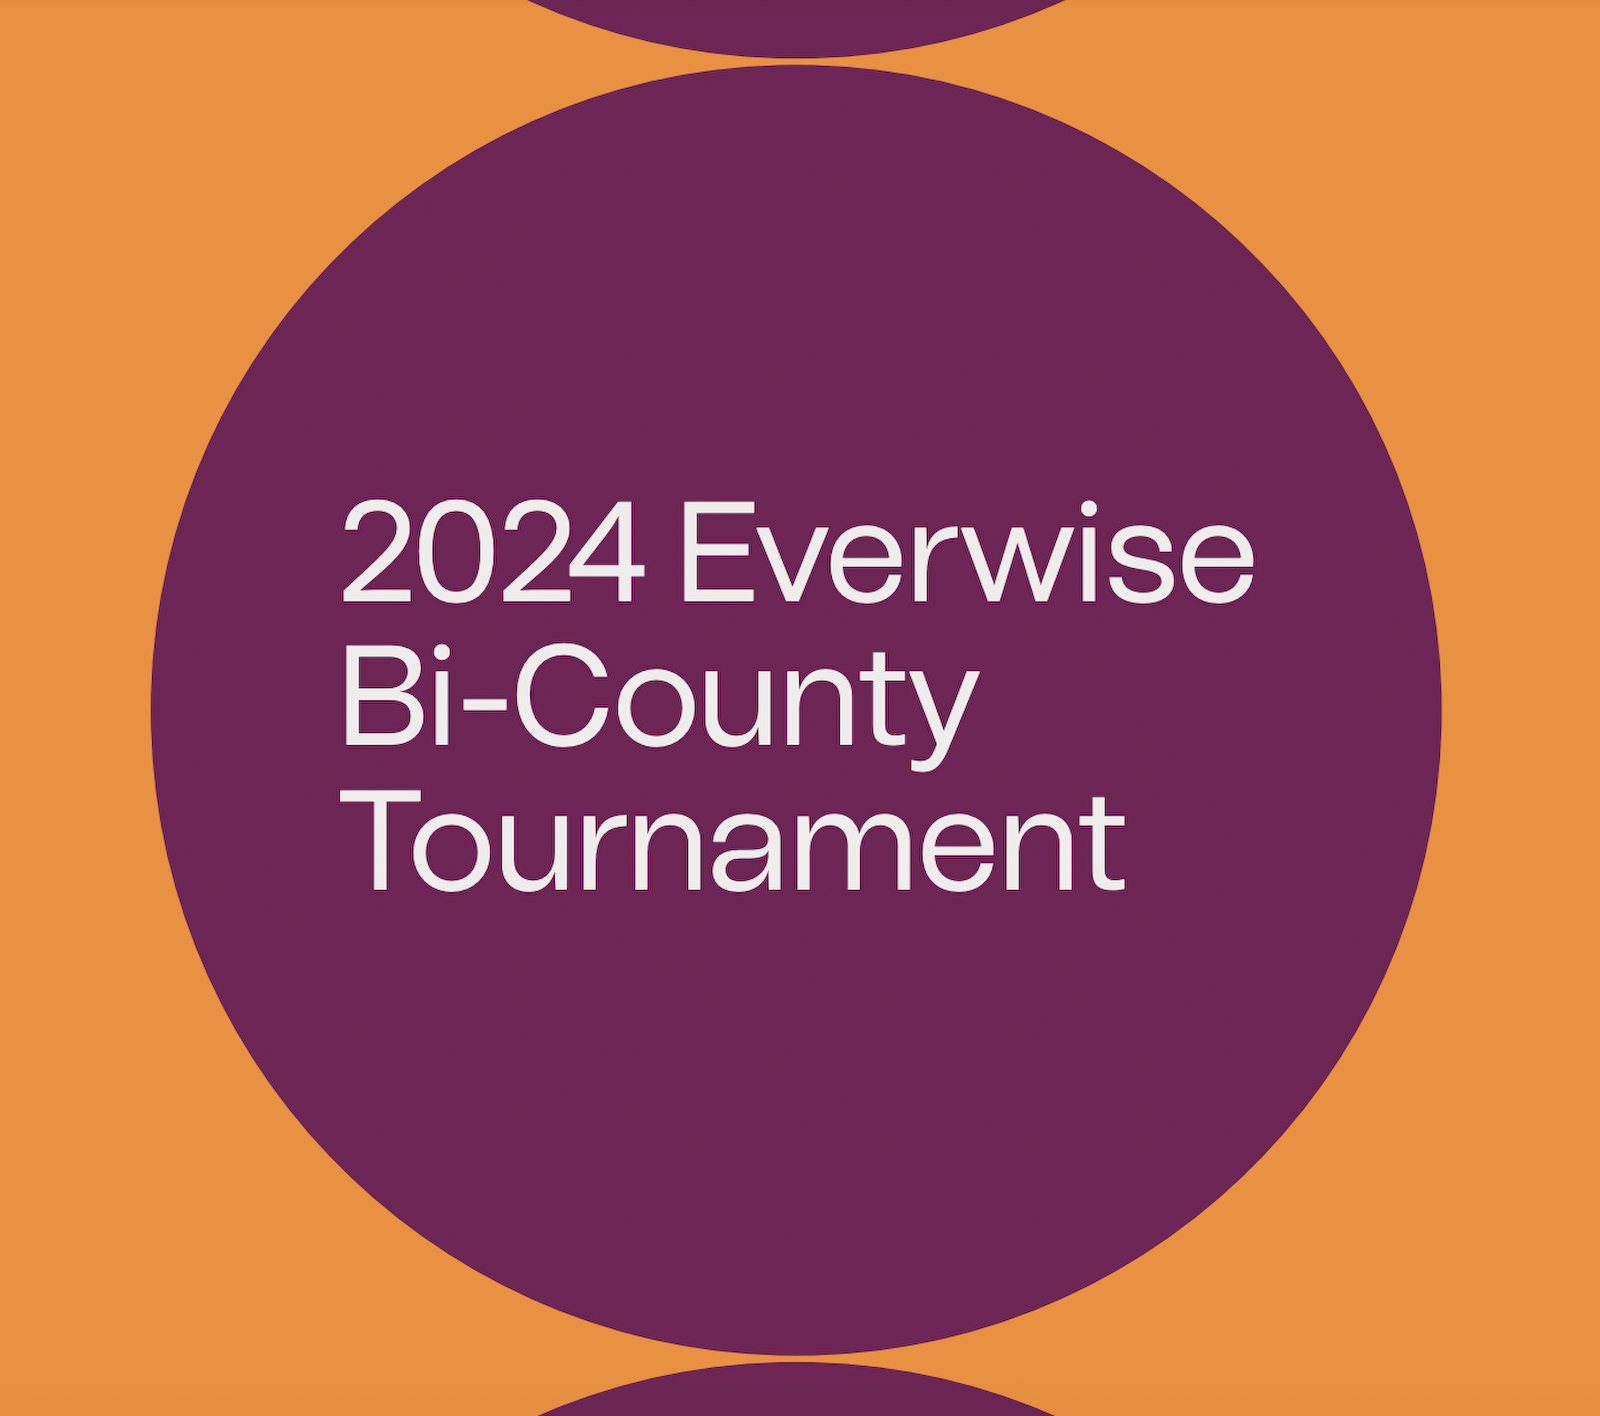 Bkb - 2024 Everwise Bi-County Tournament Artwork.png